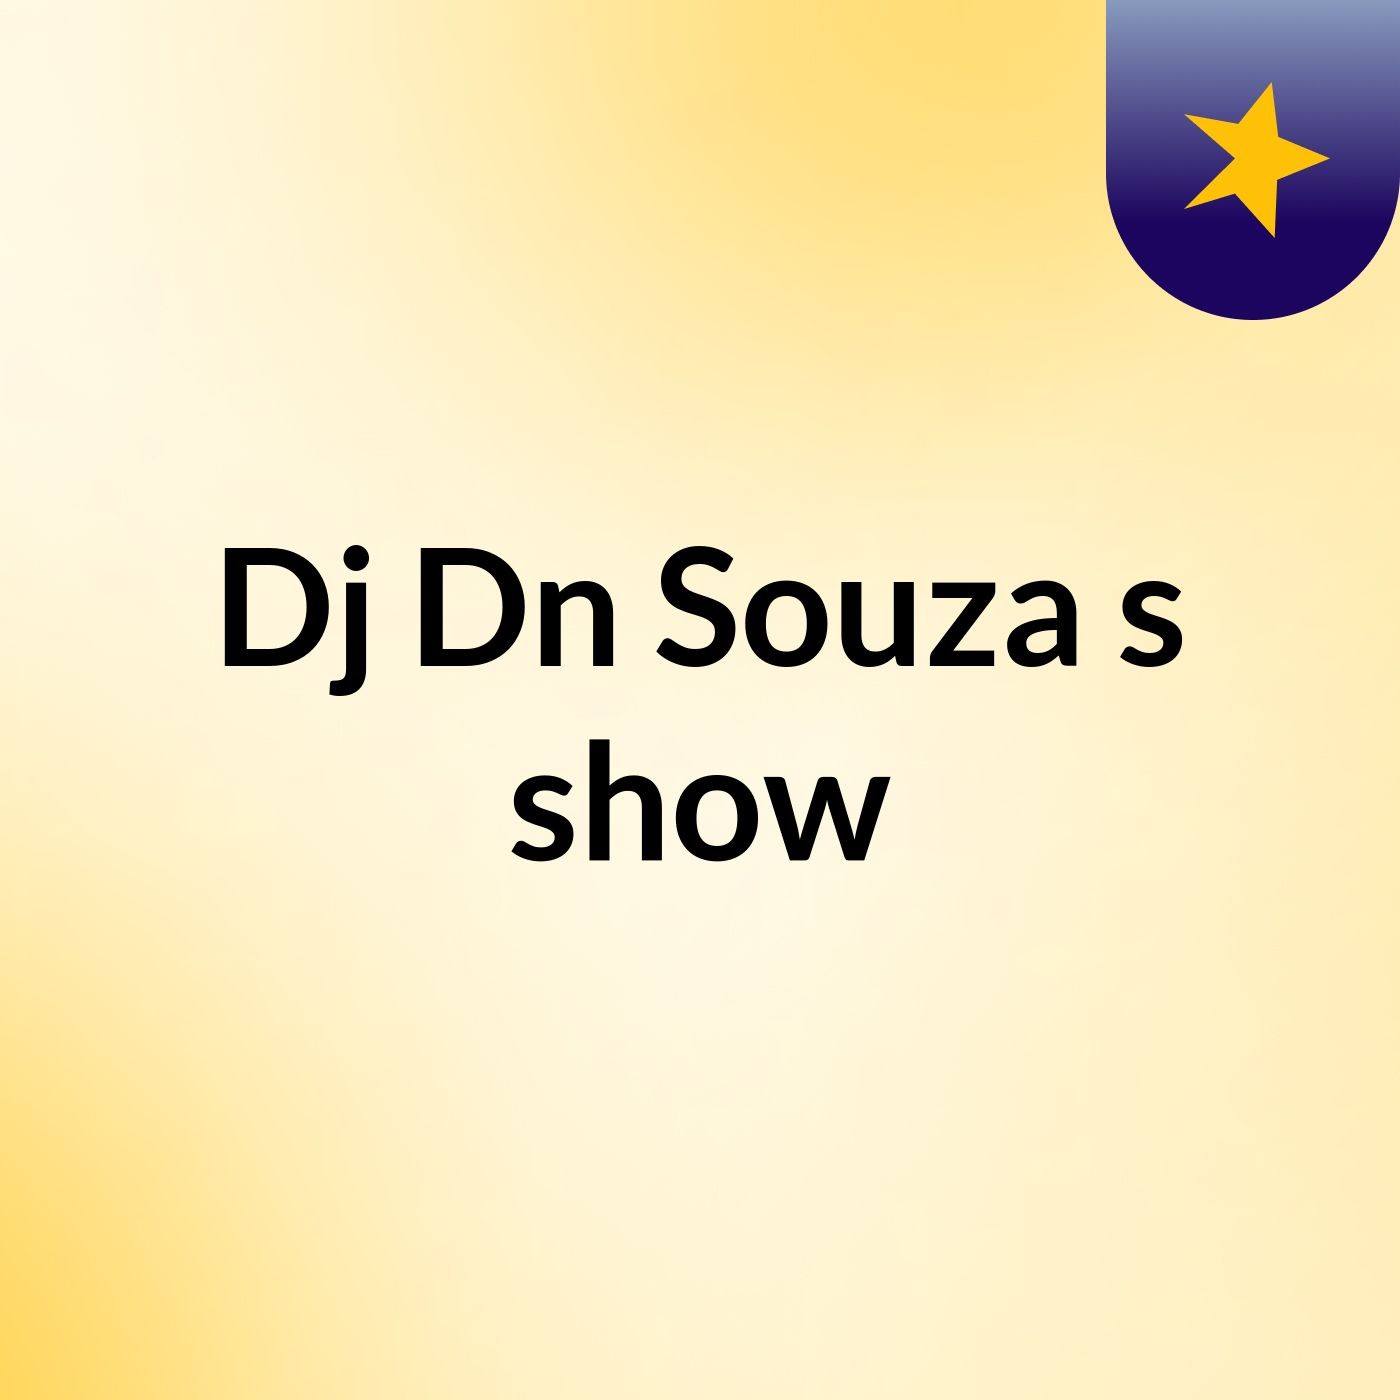 Dj Dn Souza's show